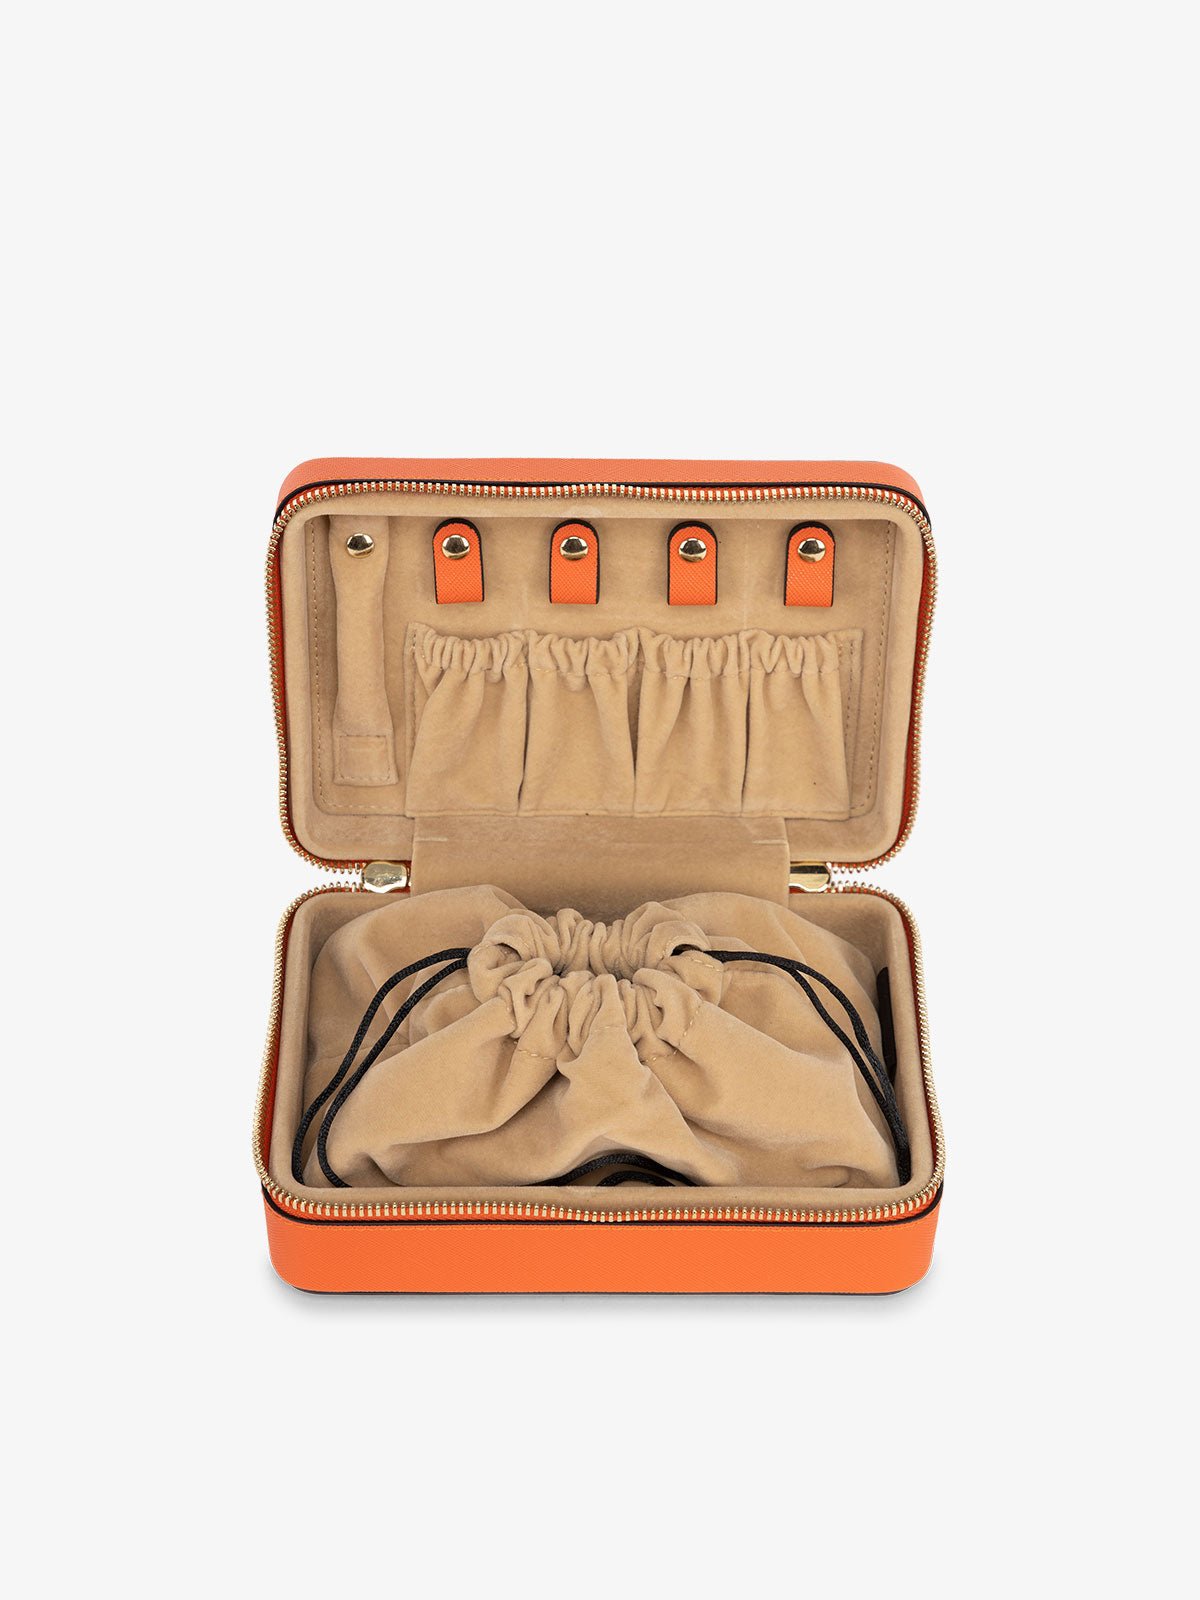 CALPAK travel jewelry box for women with drawstring pocket in papaya orange